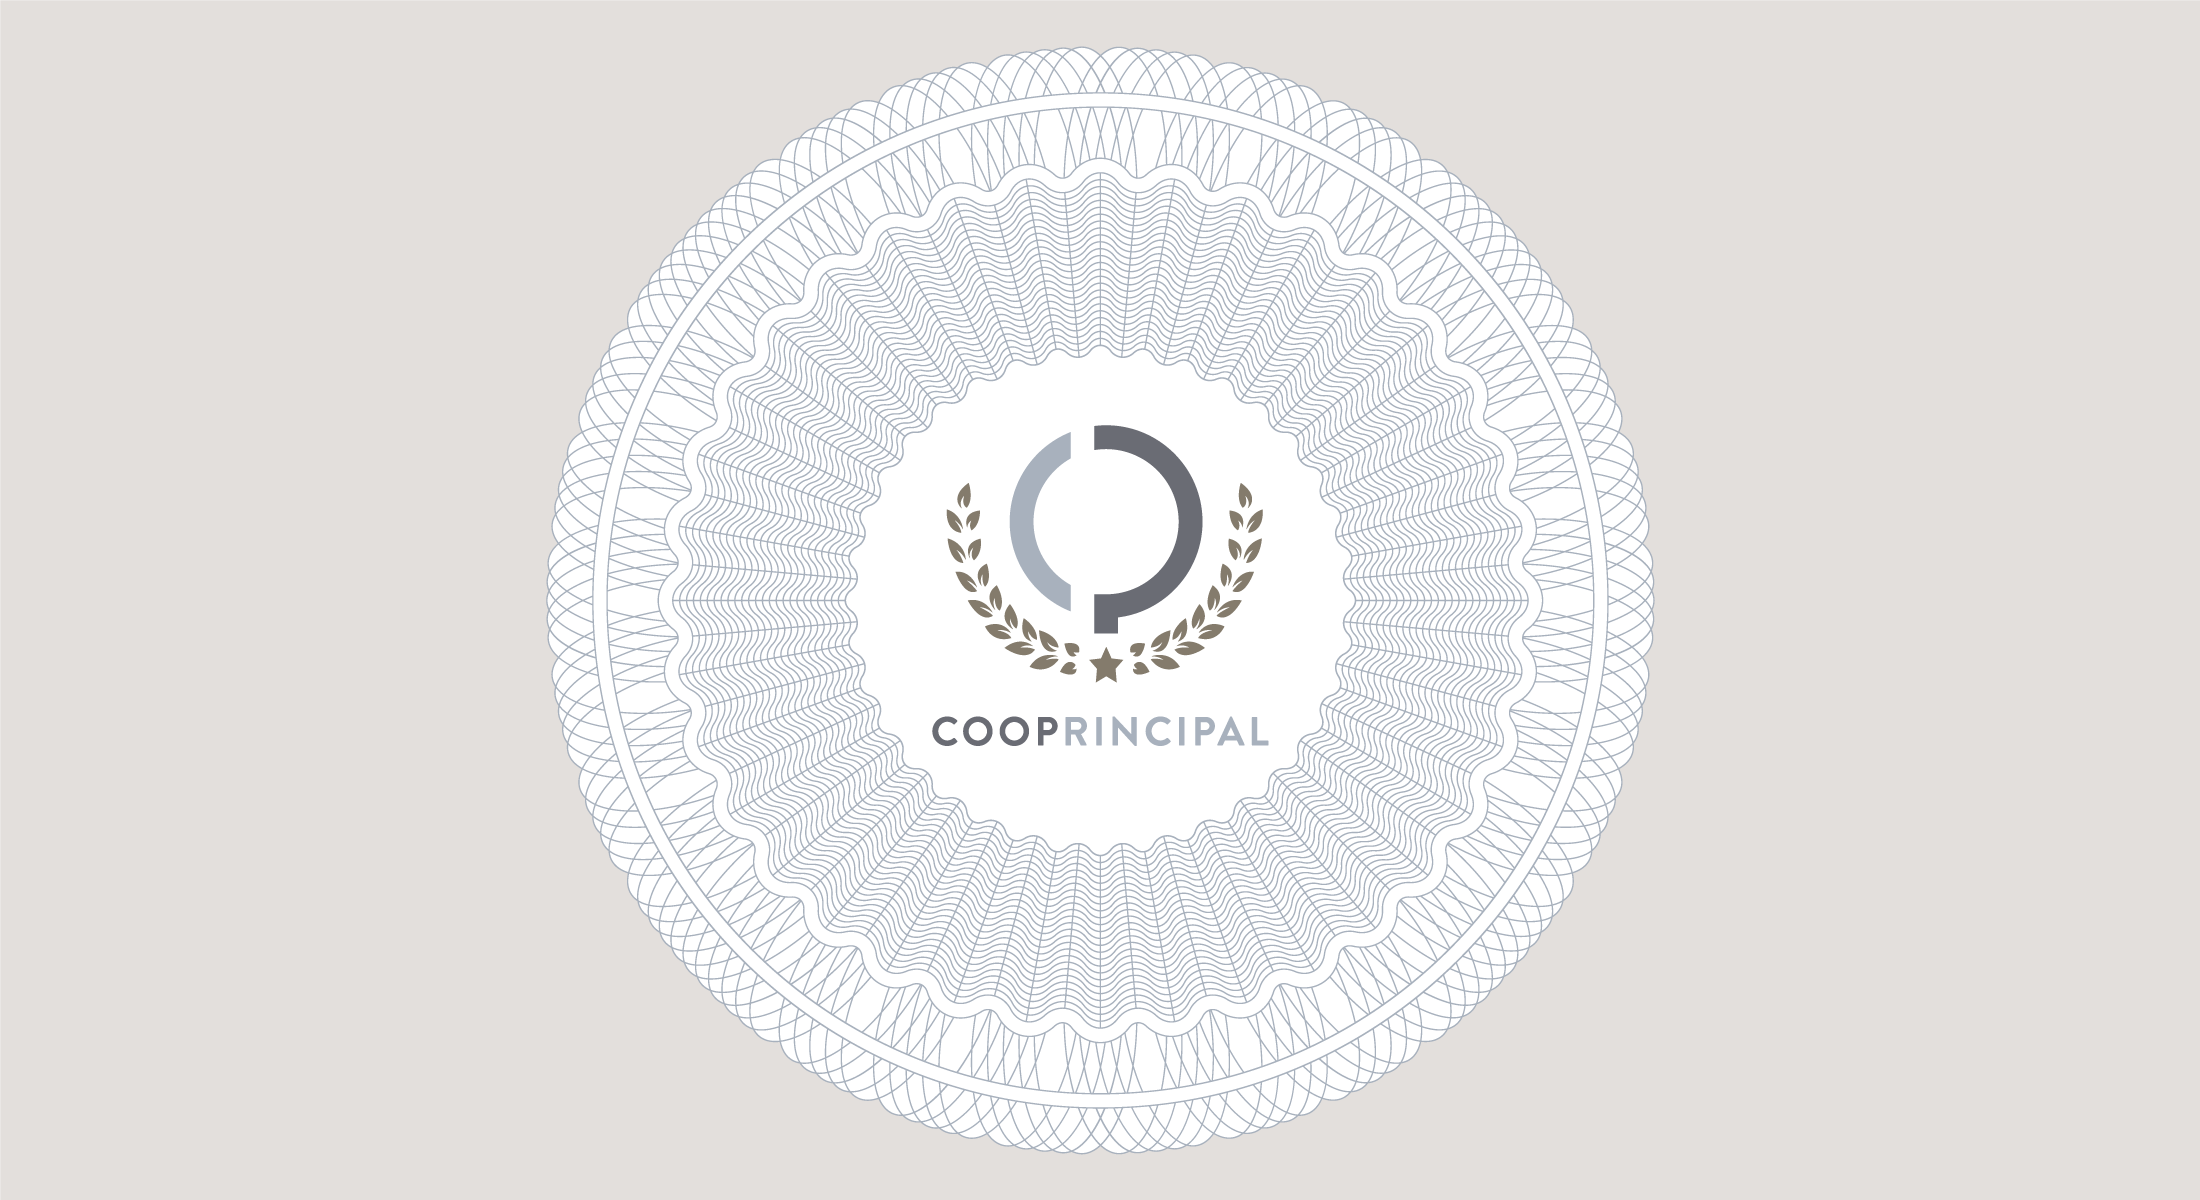 Cooperative Principal